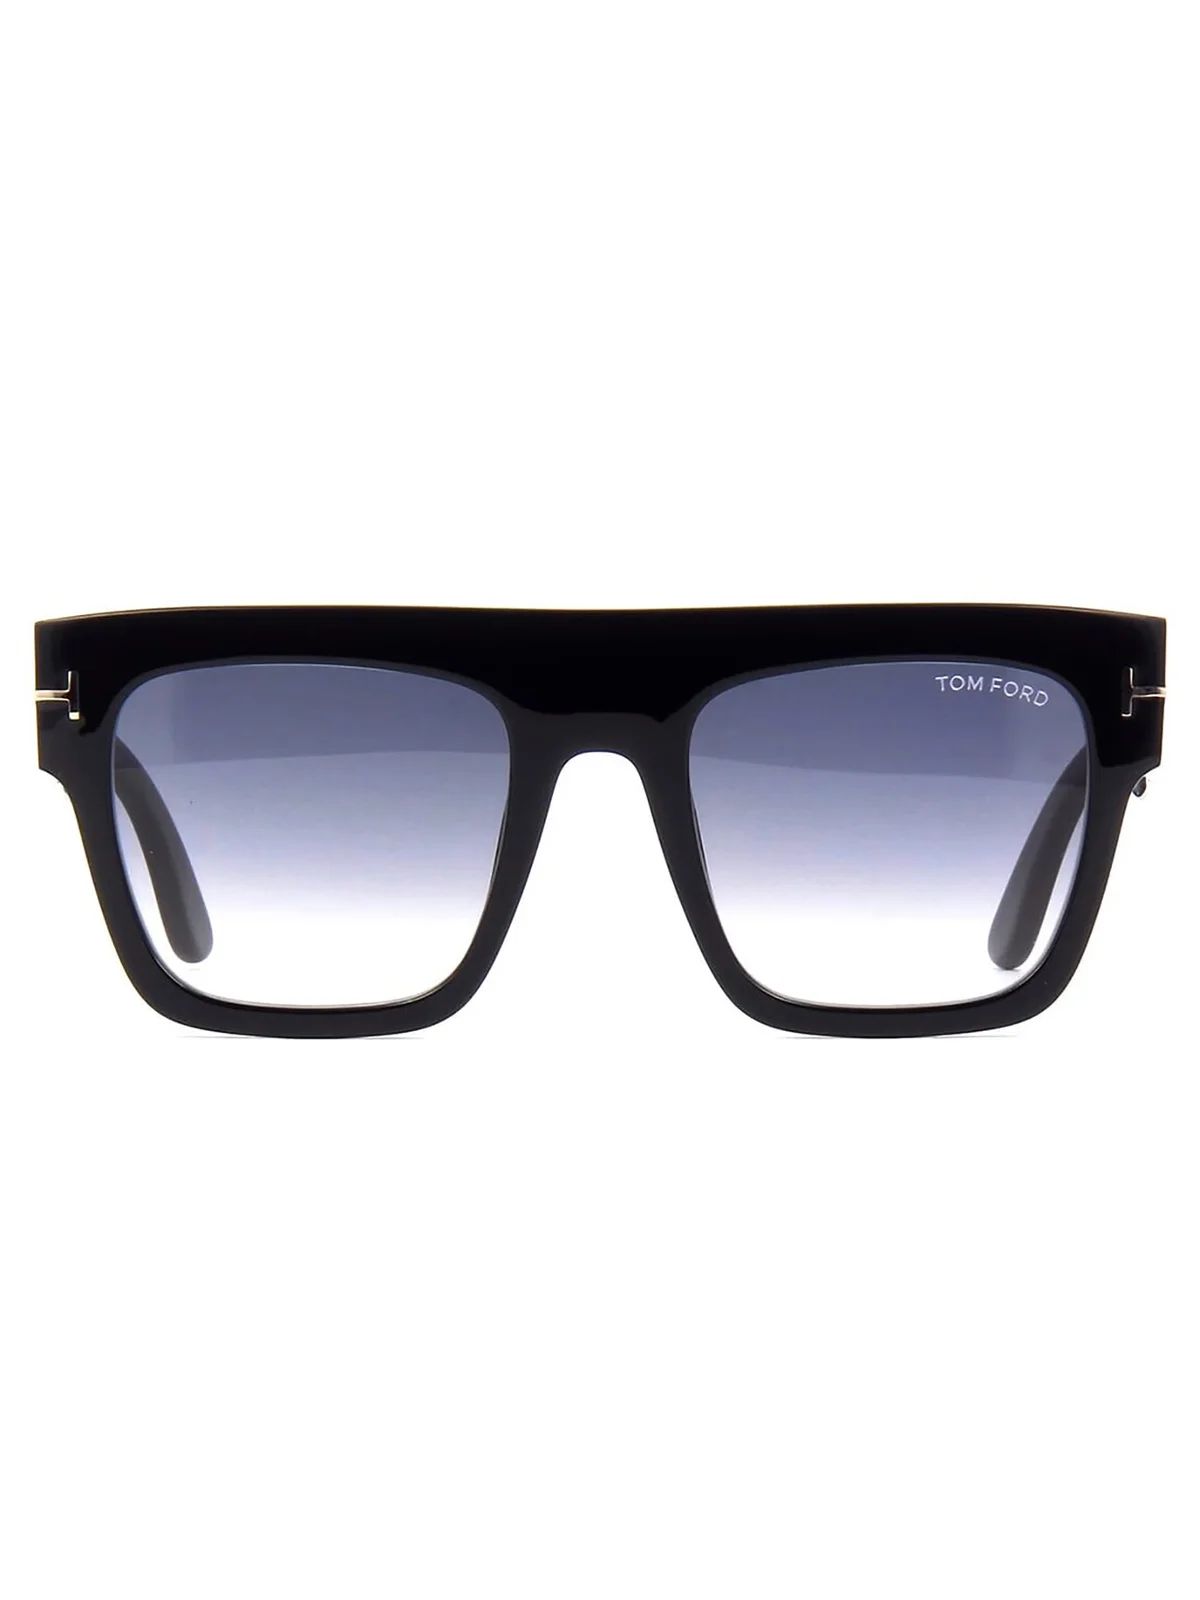 Tom Ford Eyewear Renee Square Frame Sunglasses | Cettire Global